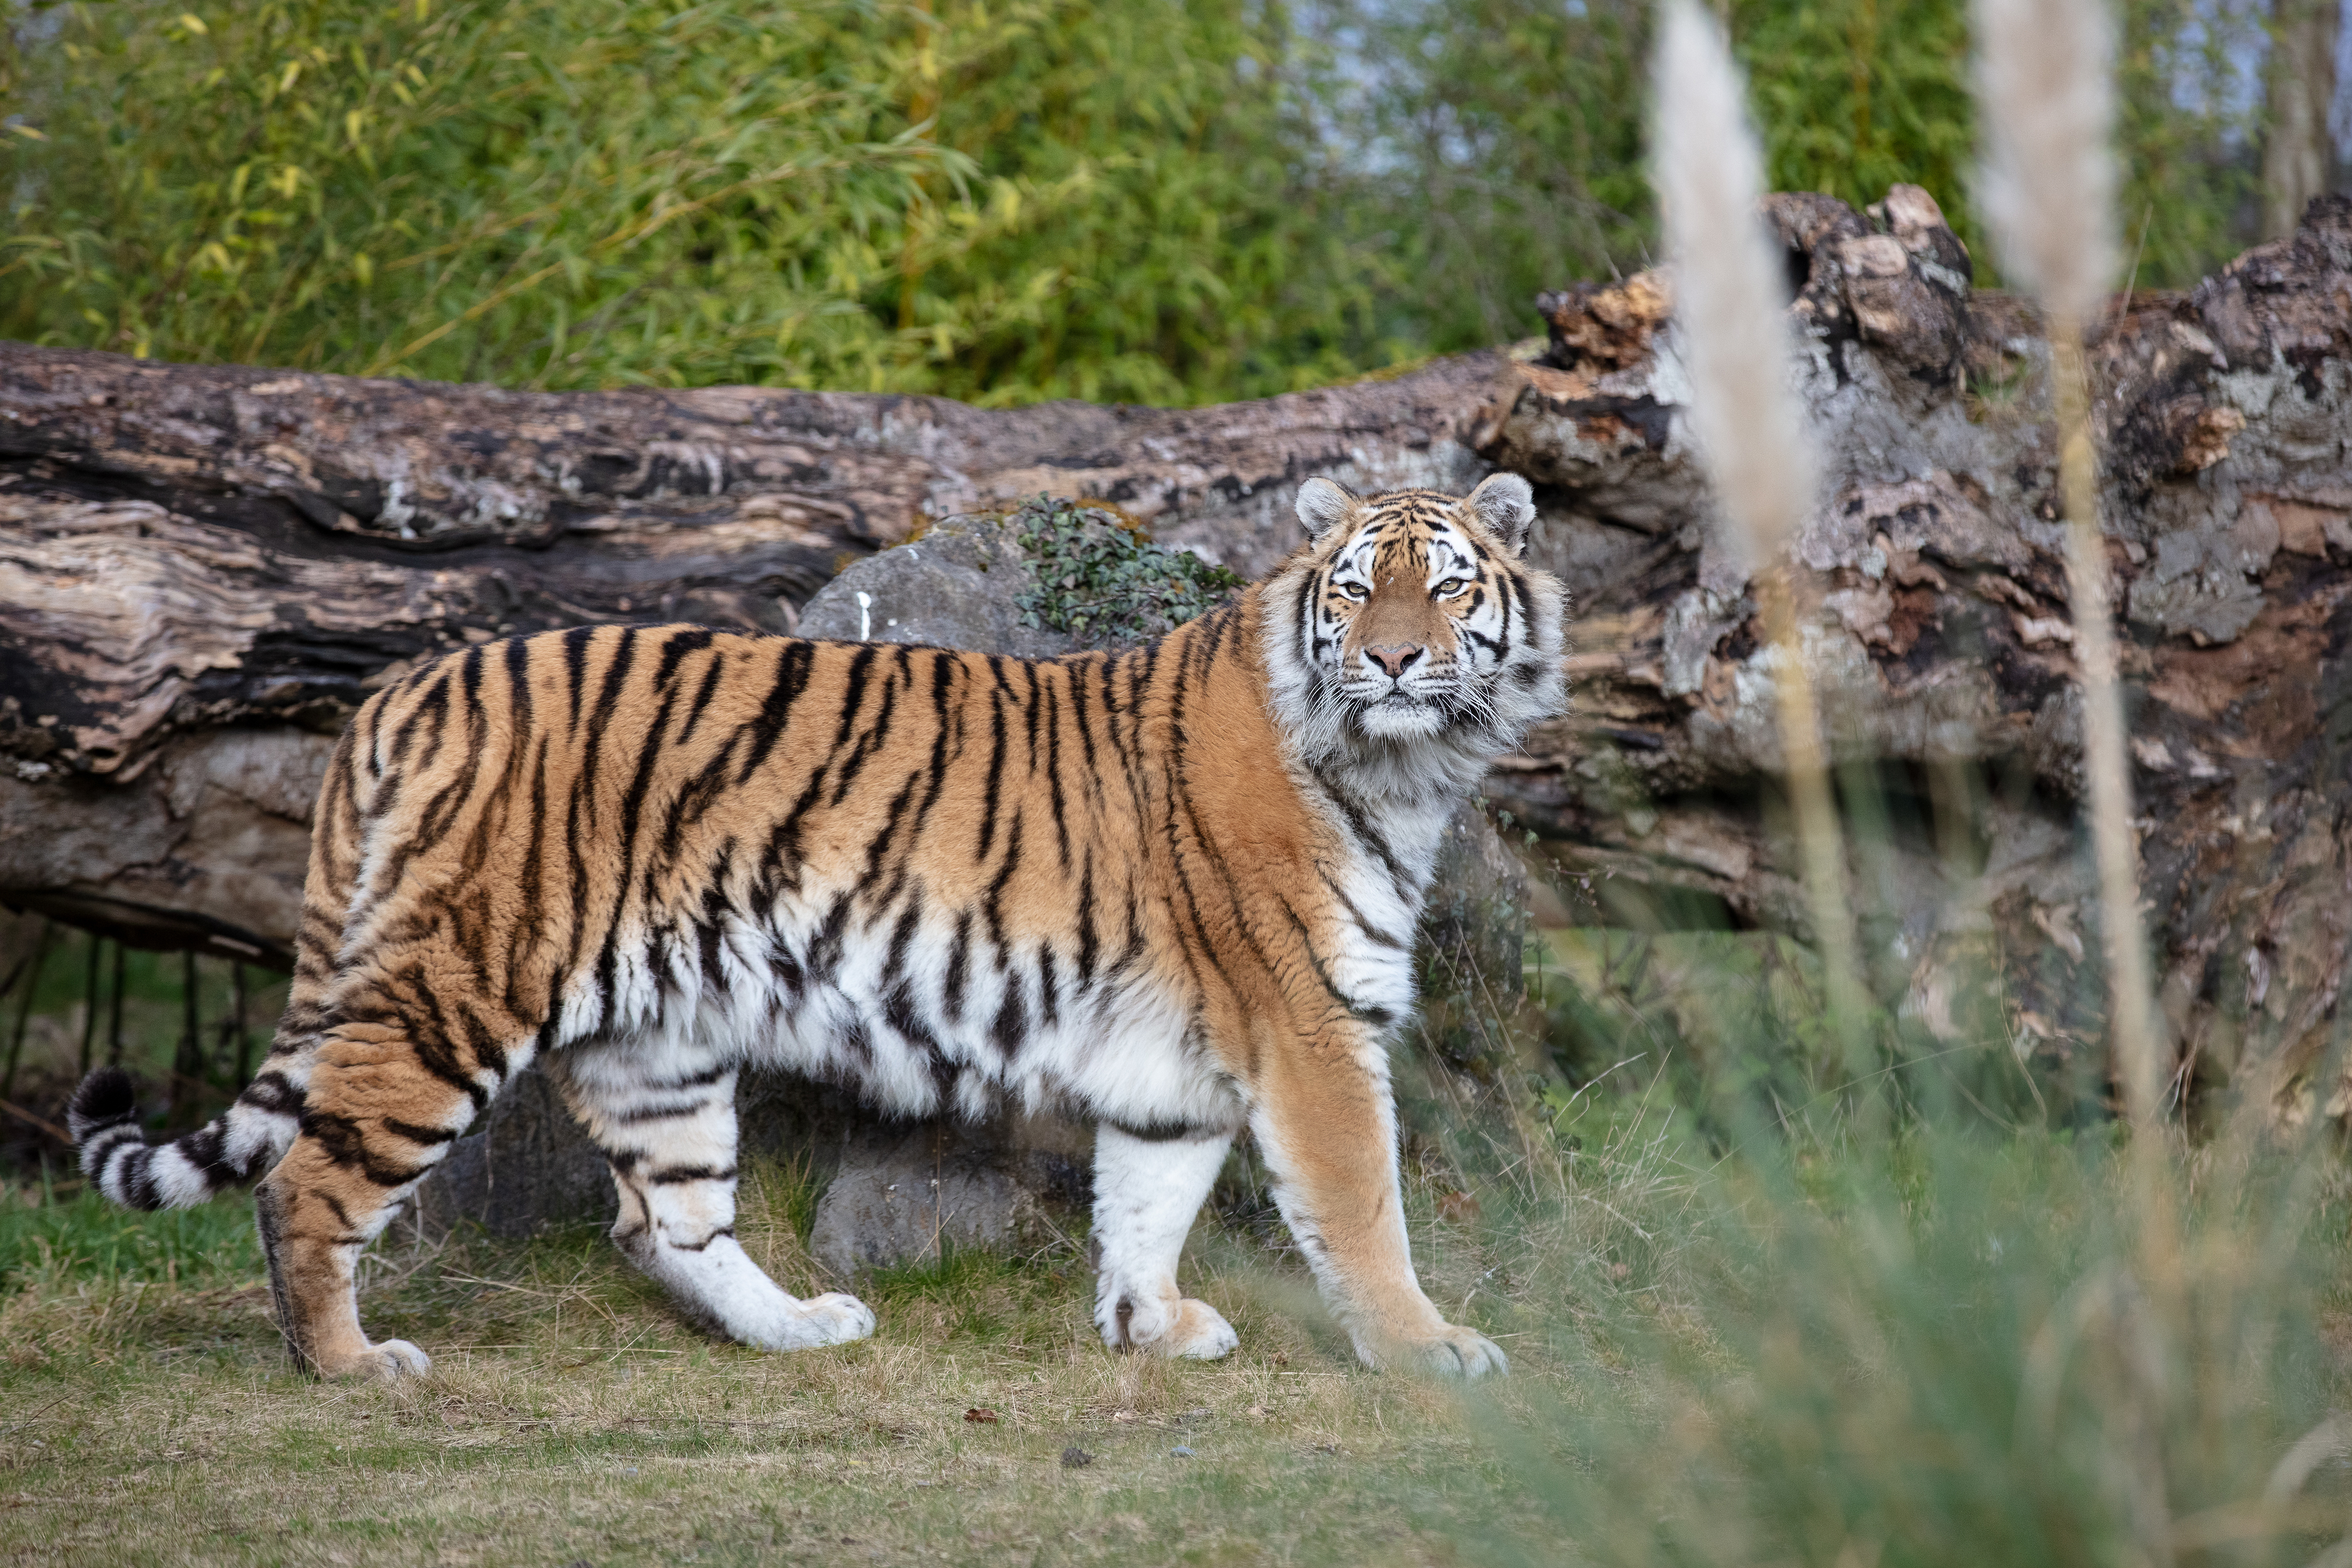 A female Amur Tiger